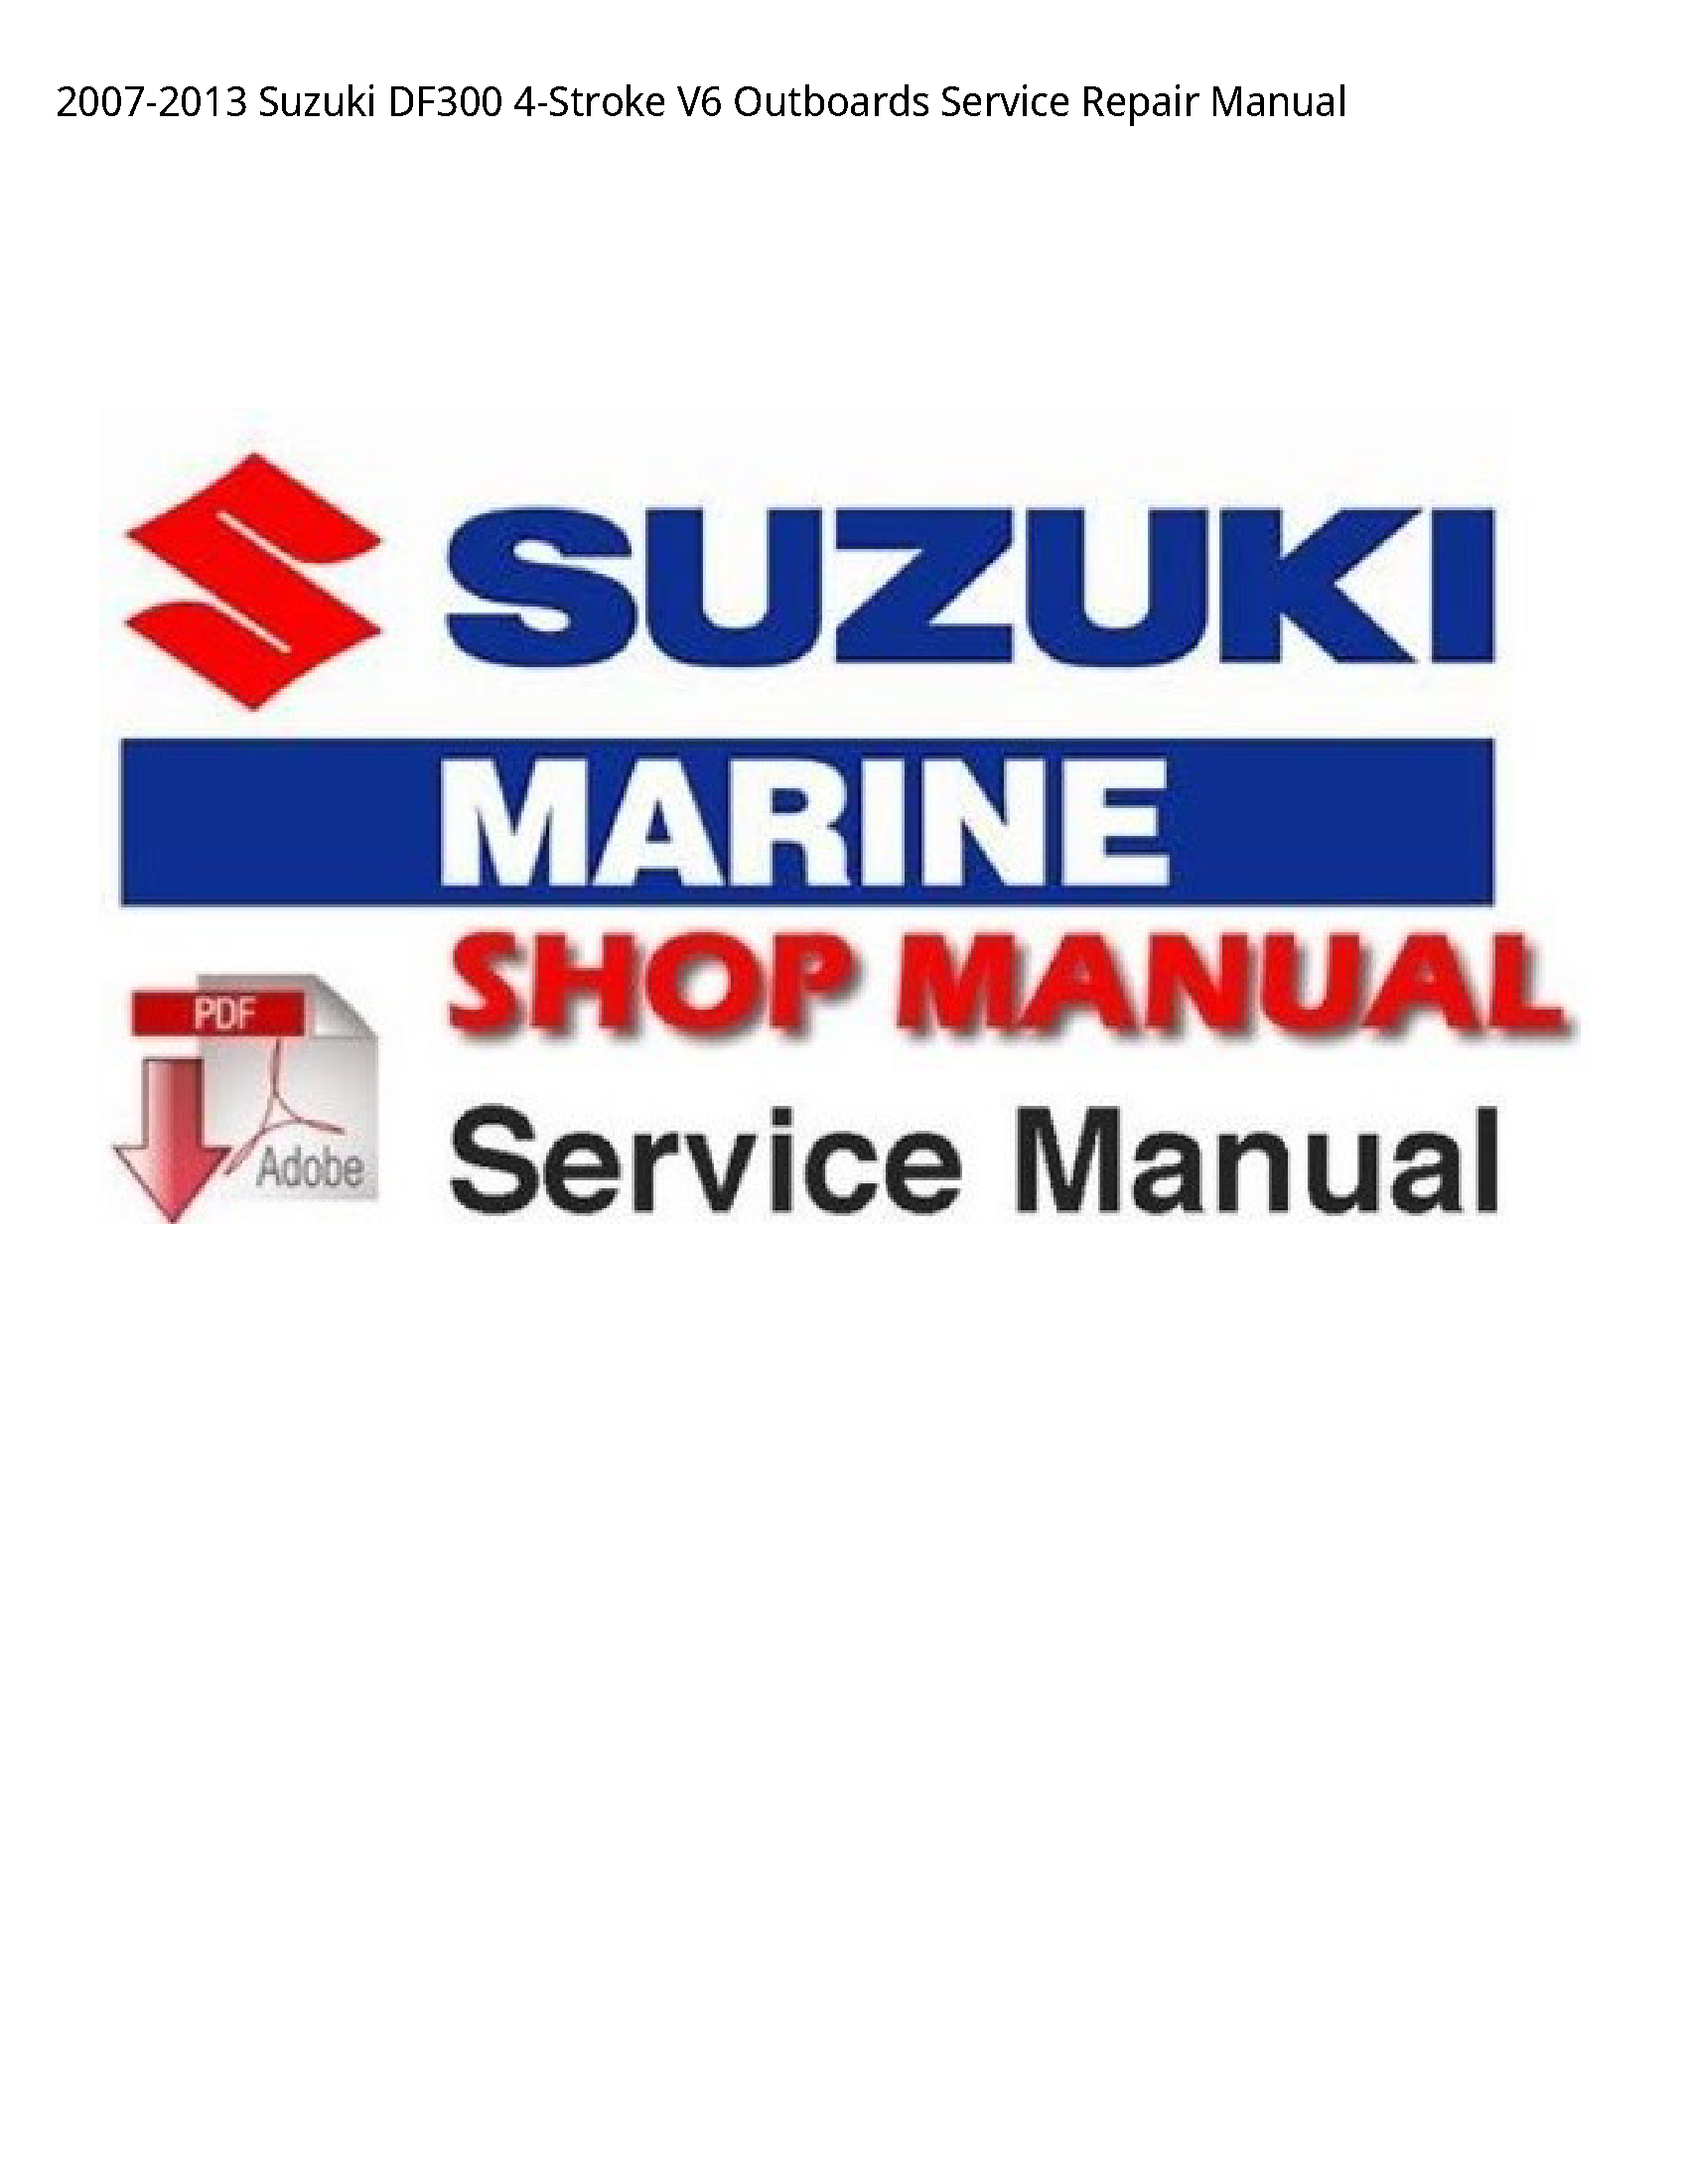 Suzuki DF300 Outboards manual